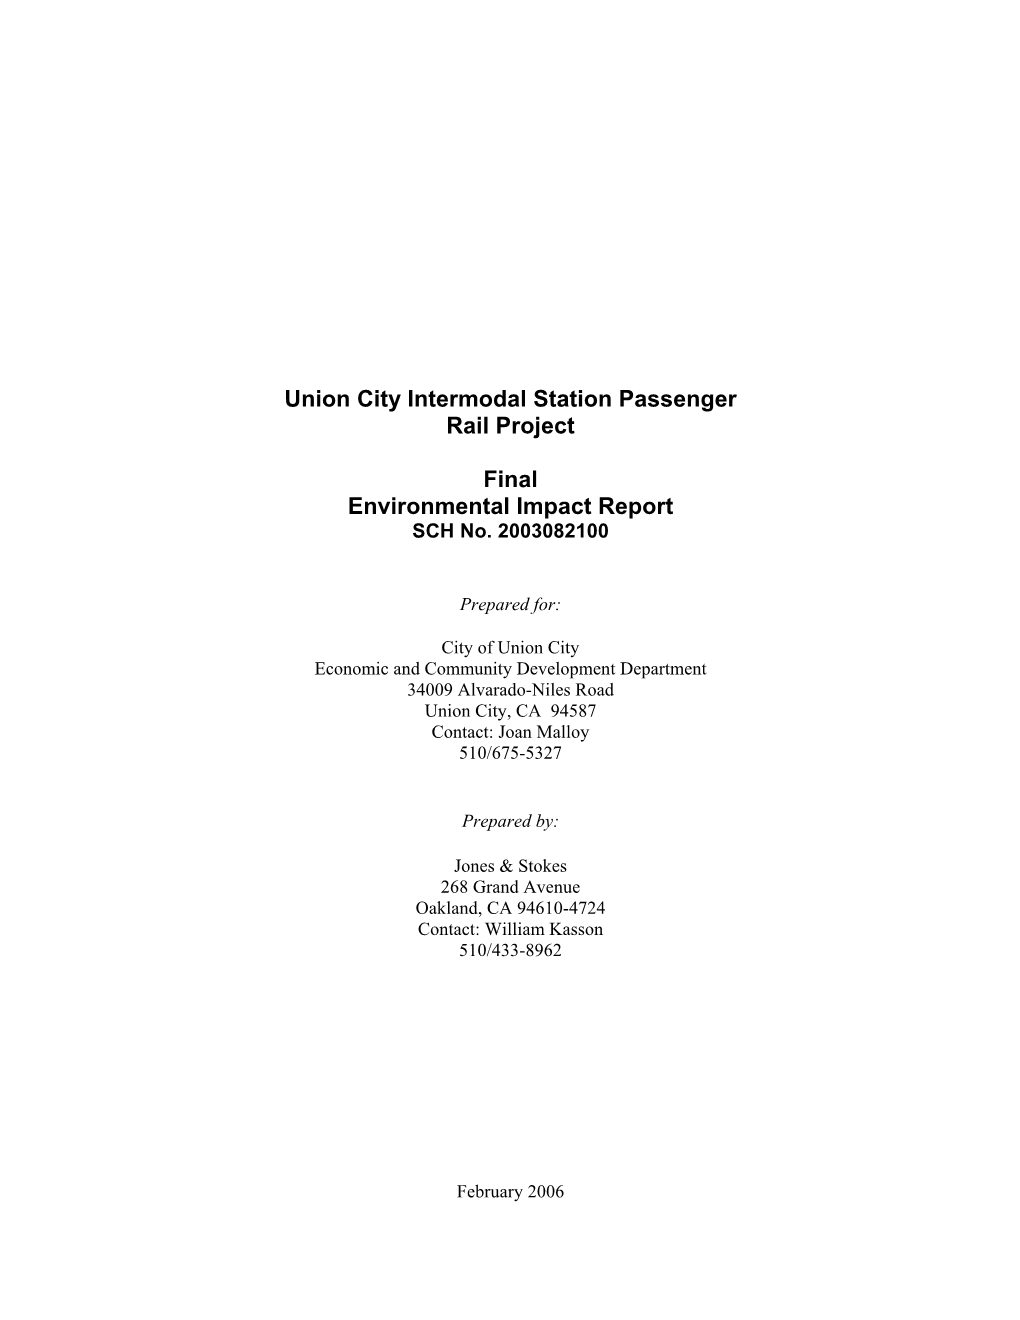 Passenger Rail Project Final Environmental Impact Report